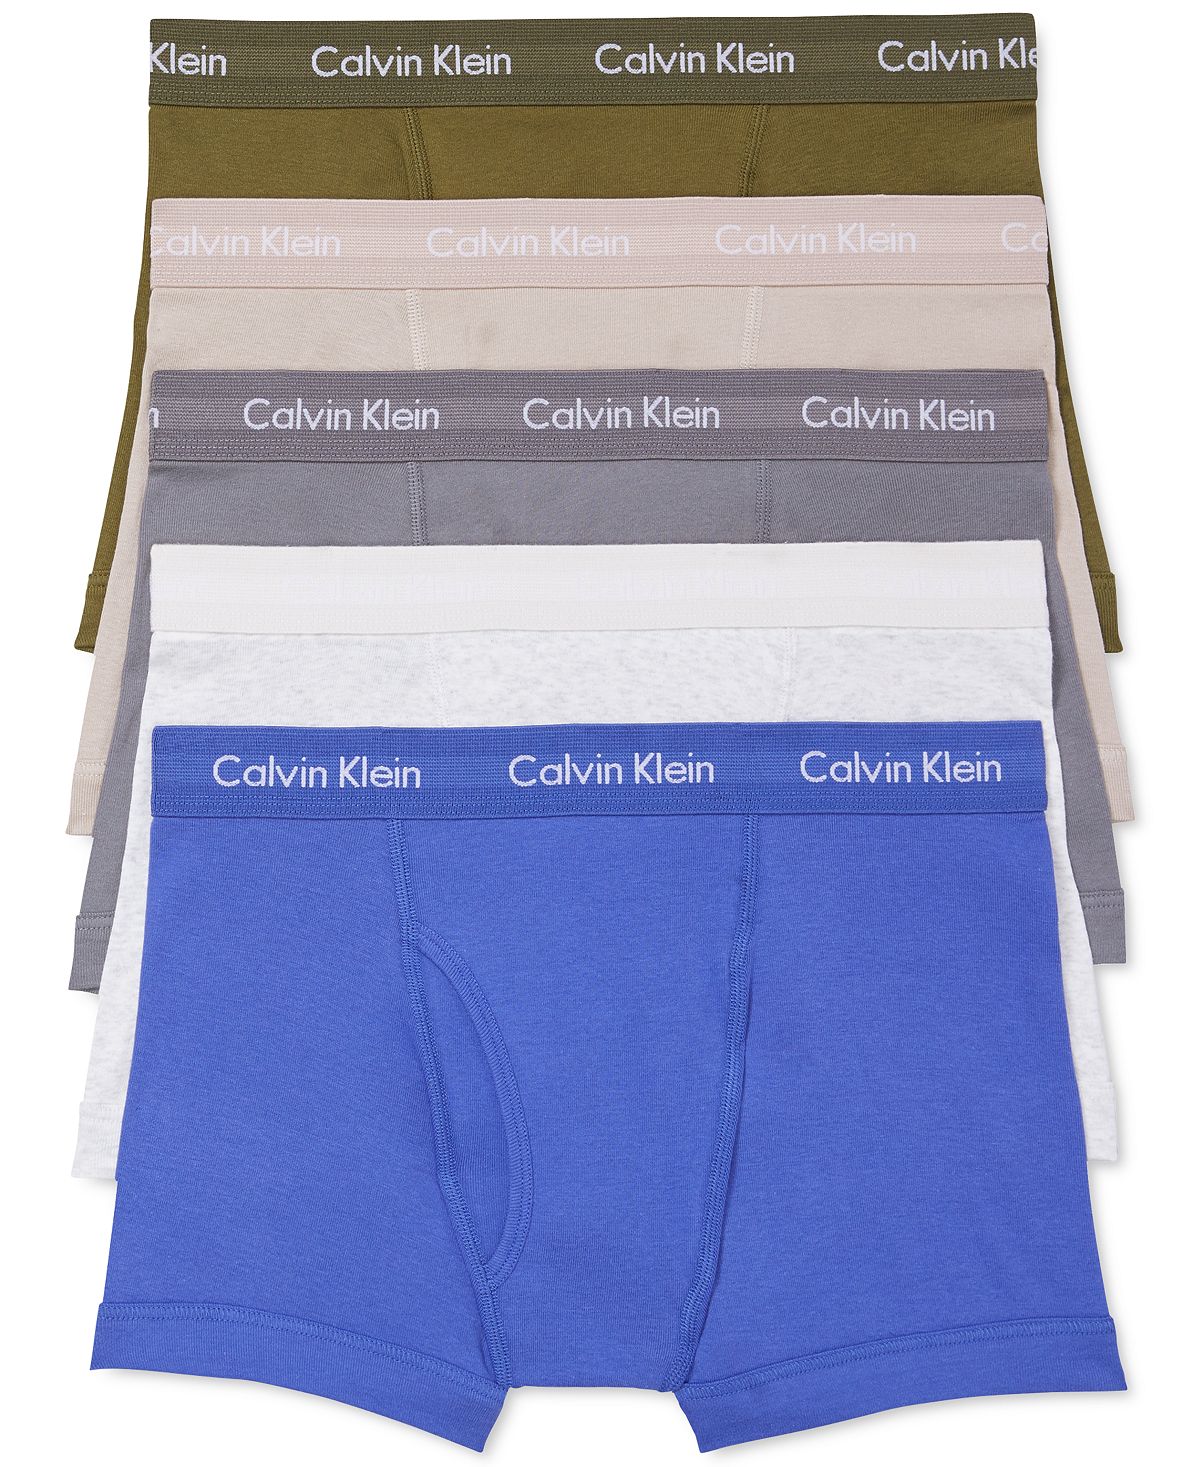 Calvin Klein 5-pk. Cotton Classics Trunks Oxford Tan, Heather, Green, Smoke